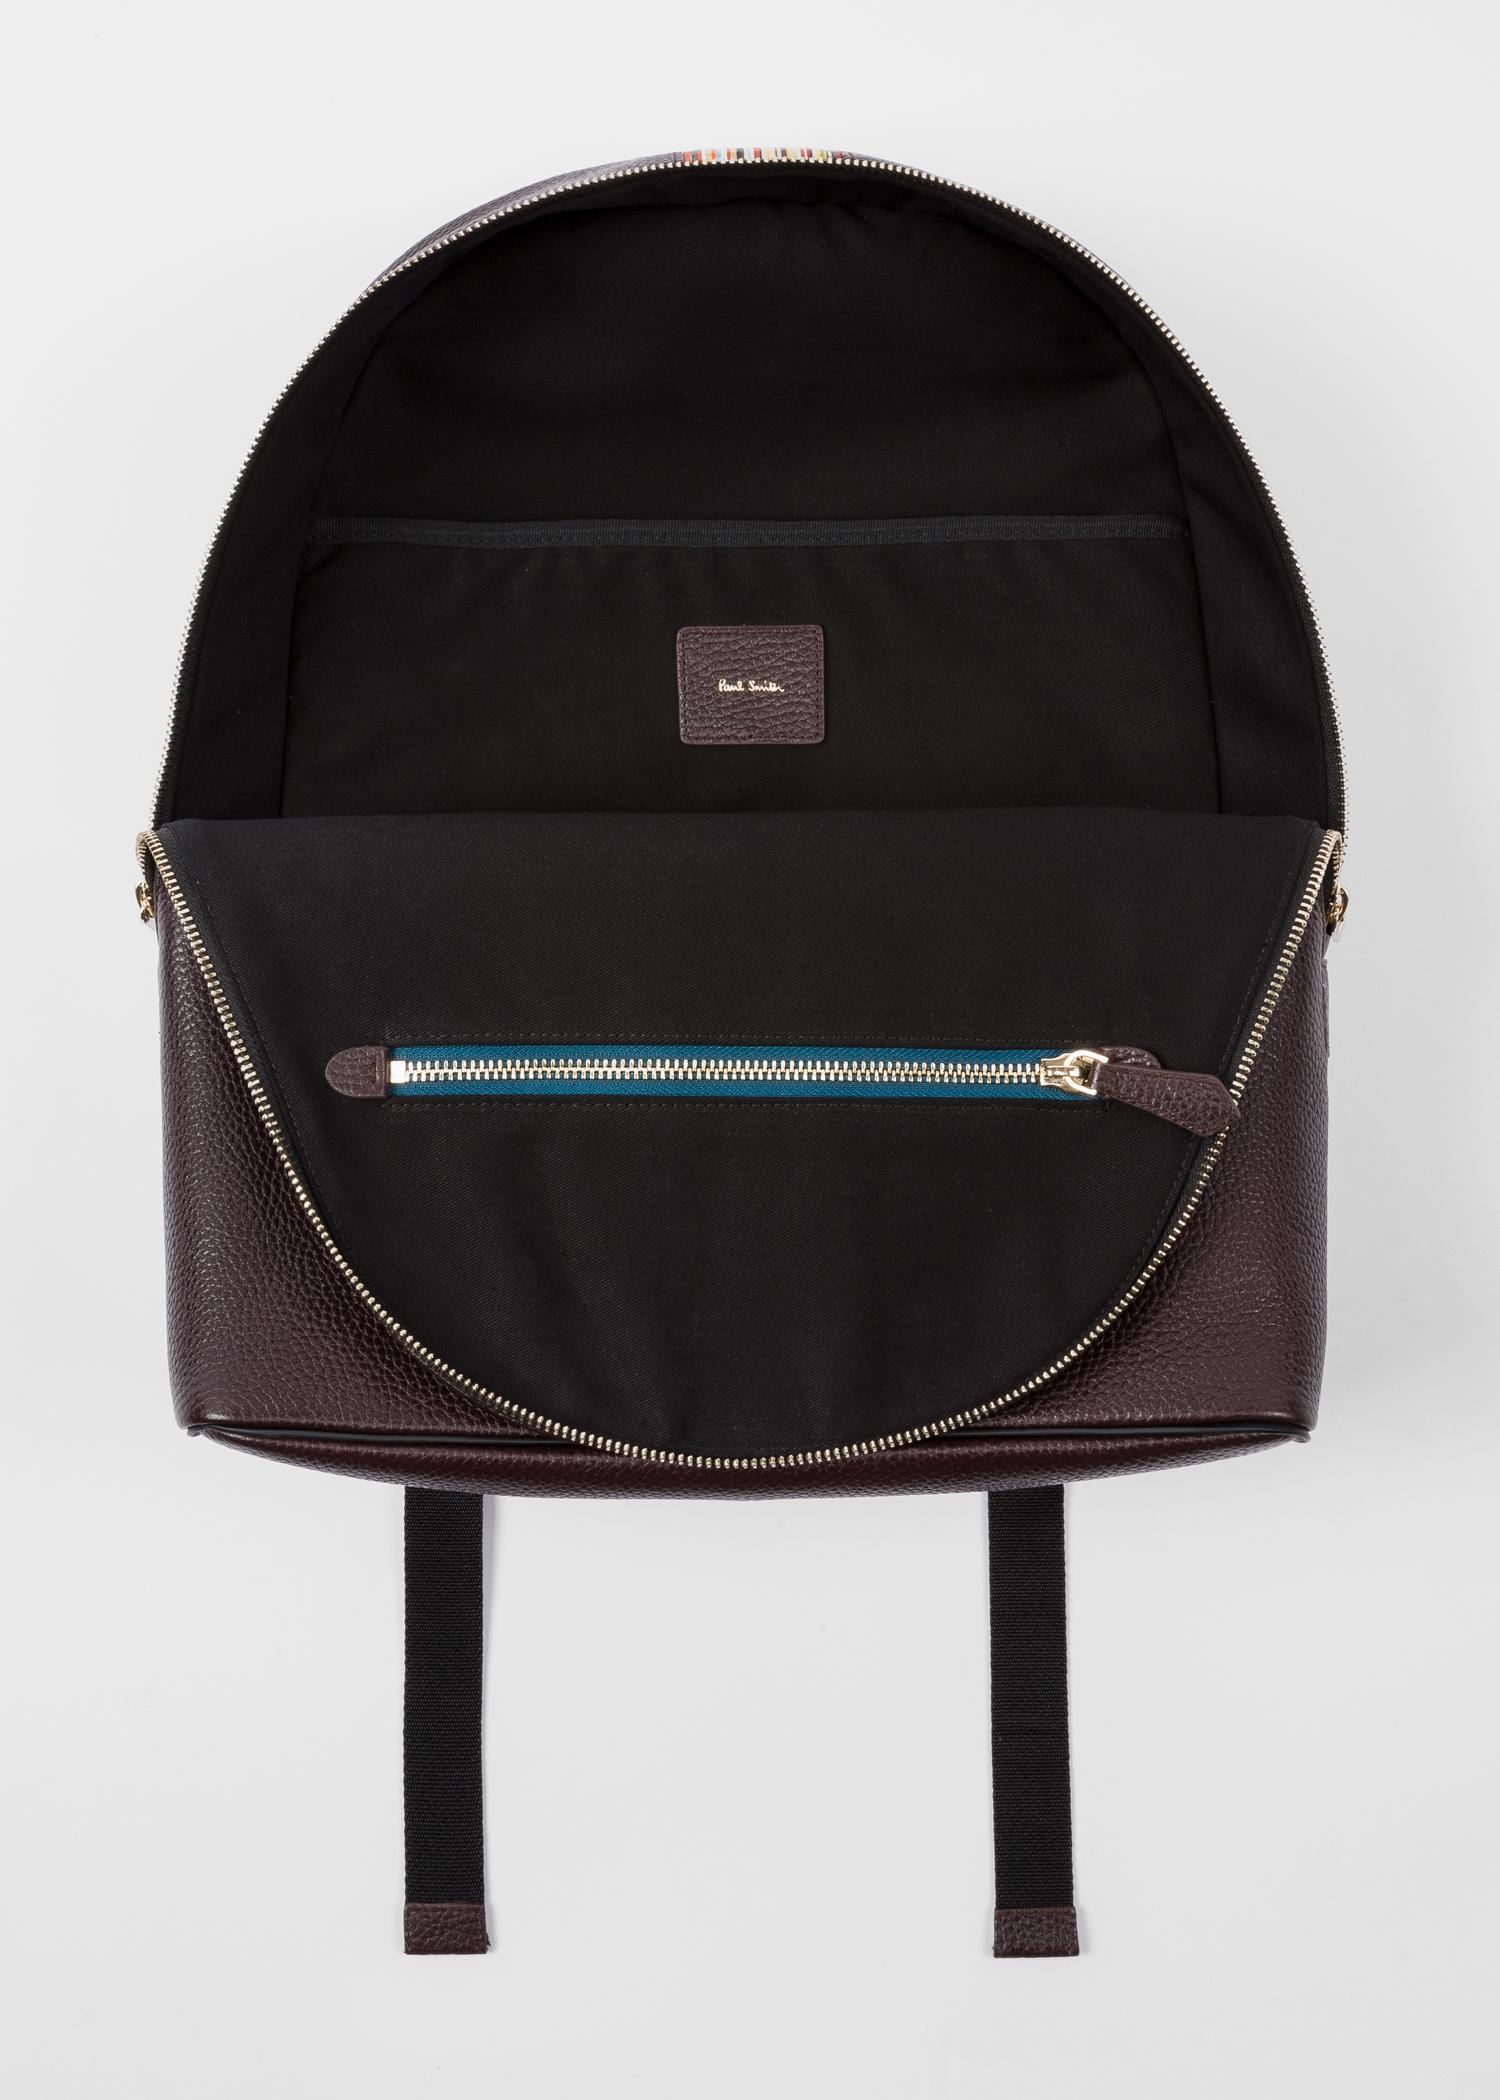 Paul Smith Dark Burgundy Leather Signature Stripe Backpack for Men - Lyst